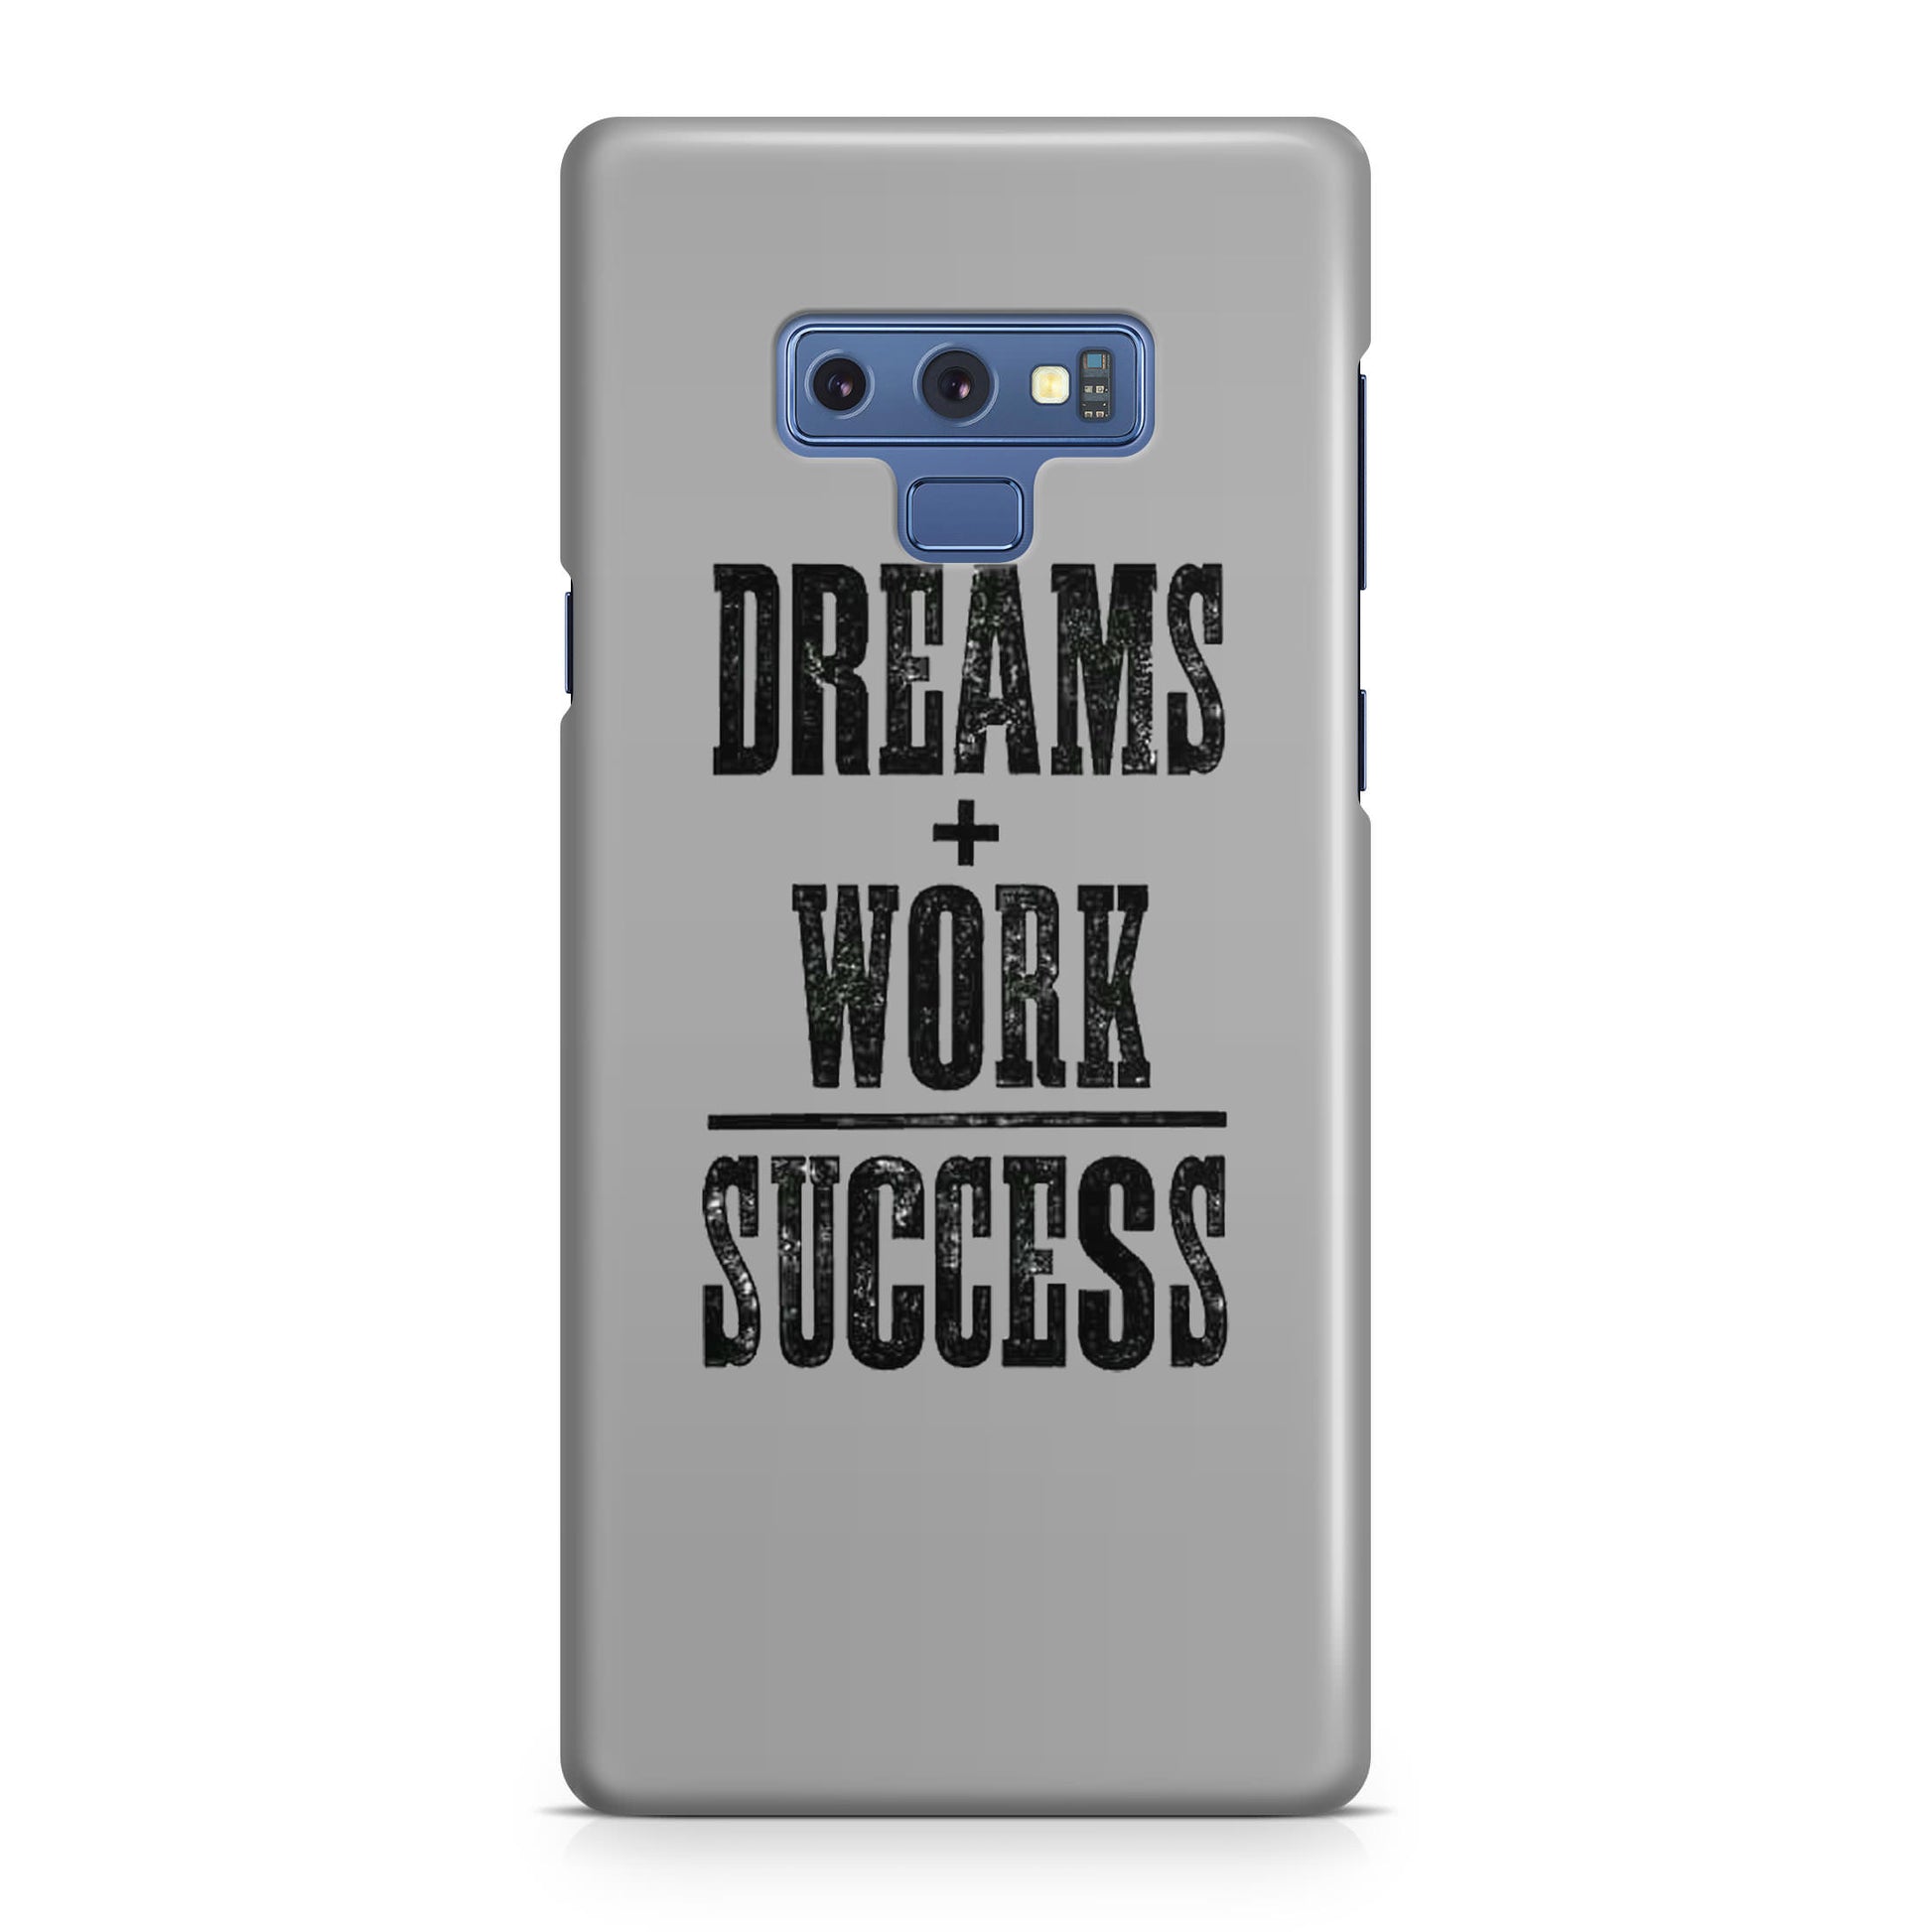 Key of Success Galaxy Note 9 Case